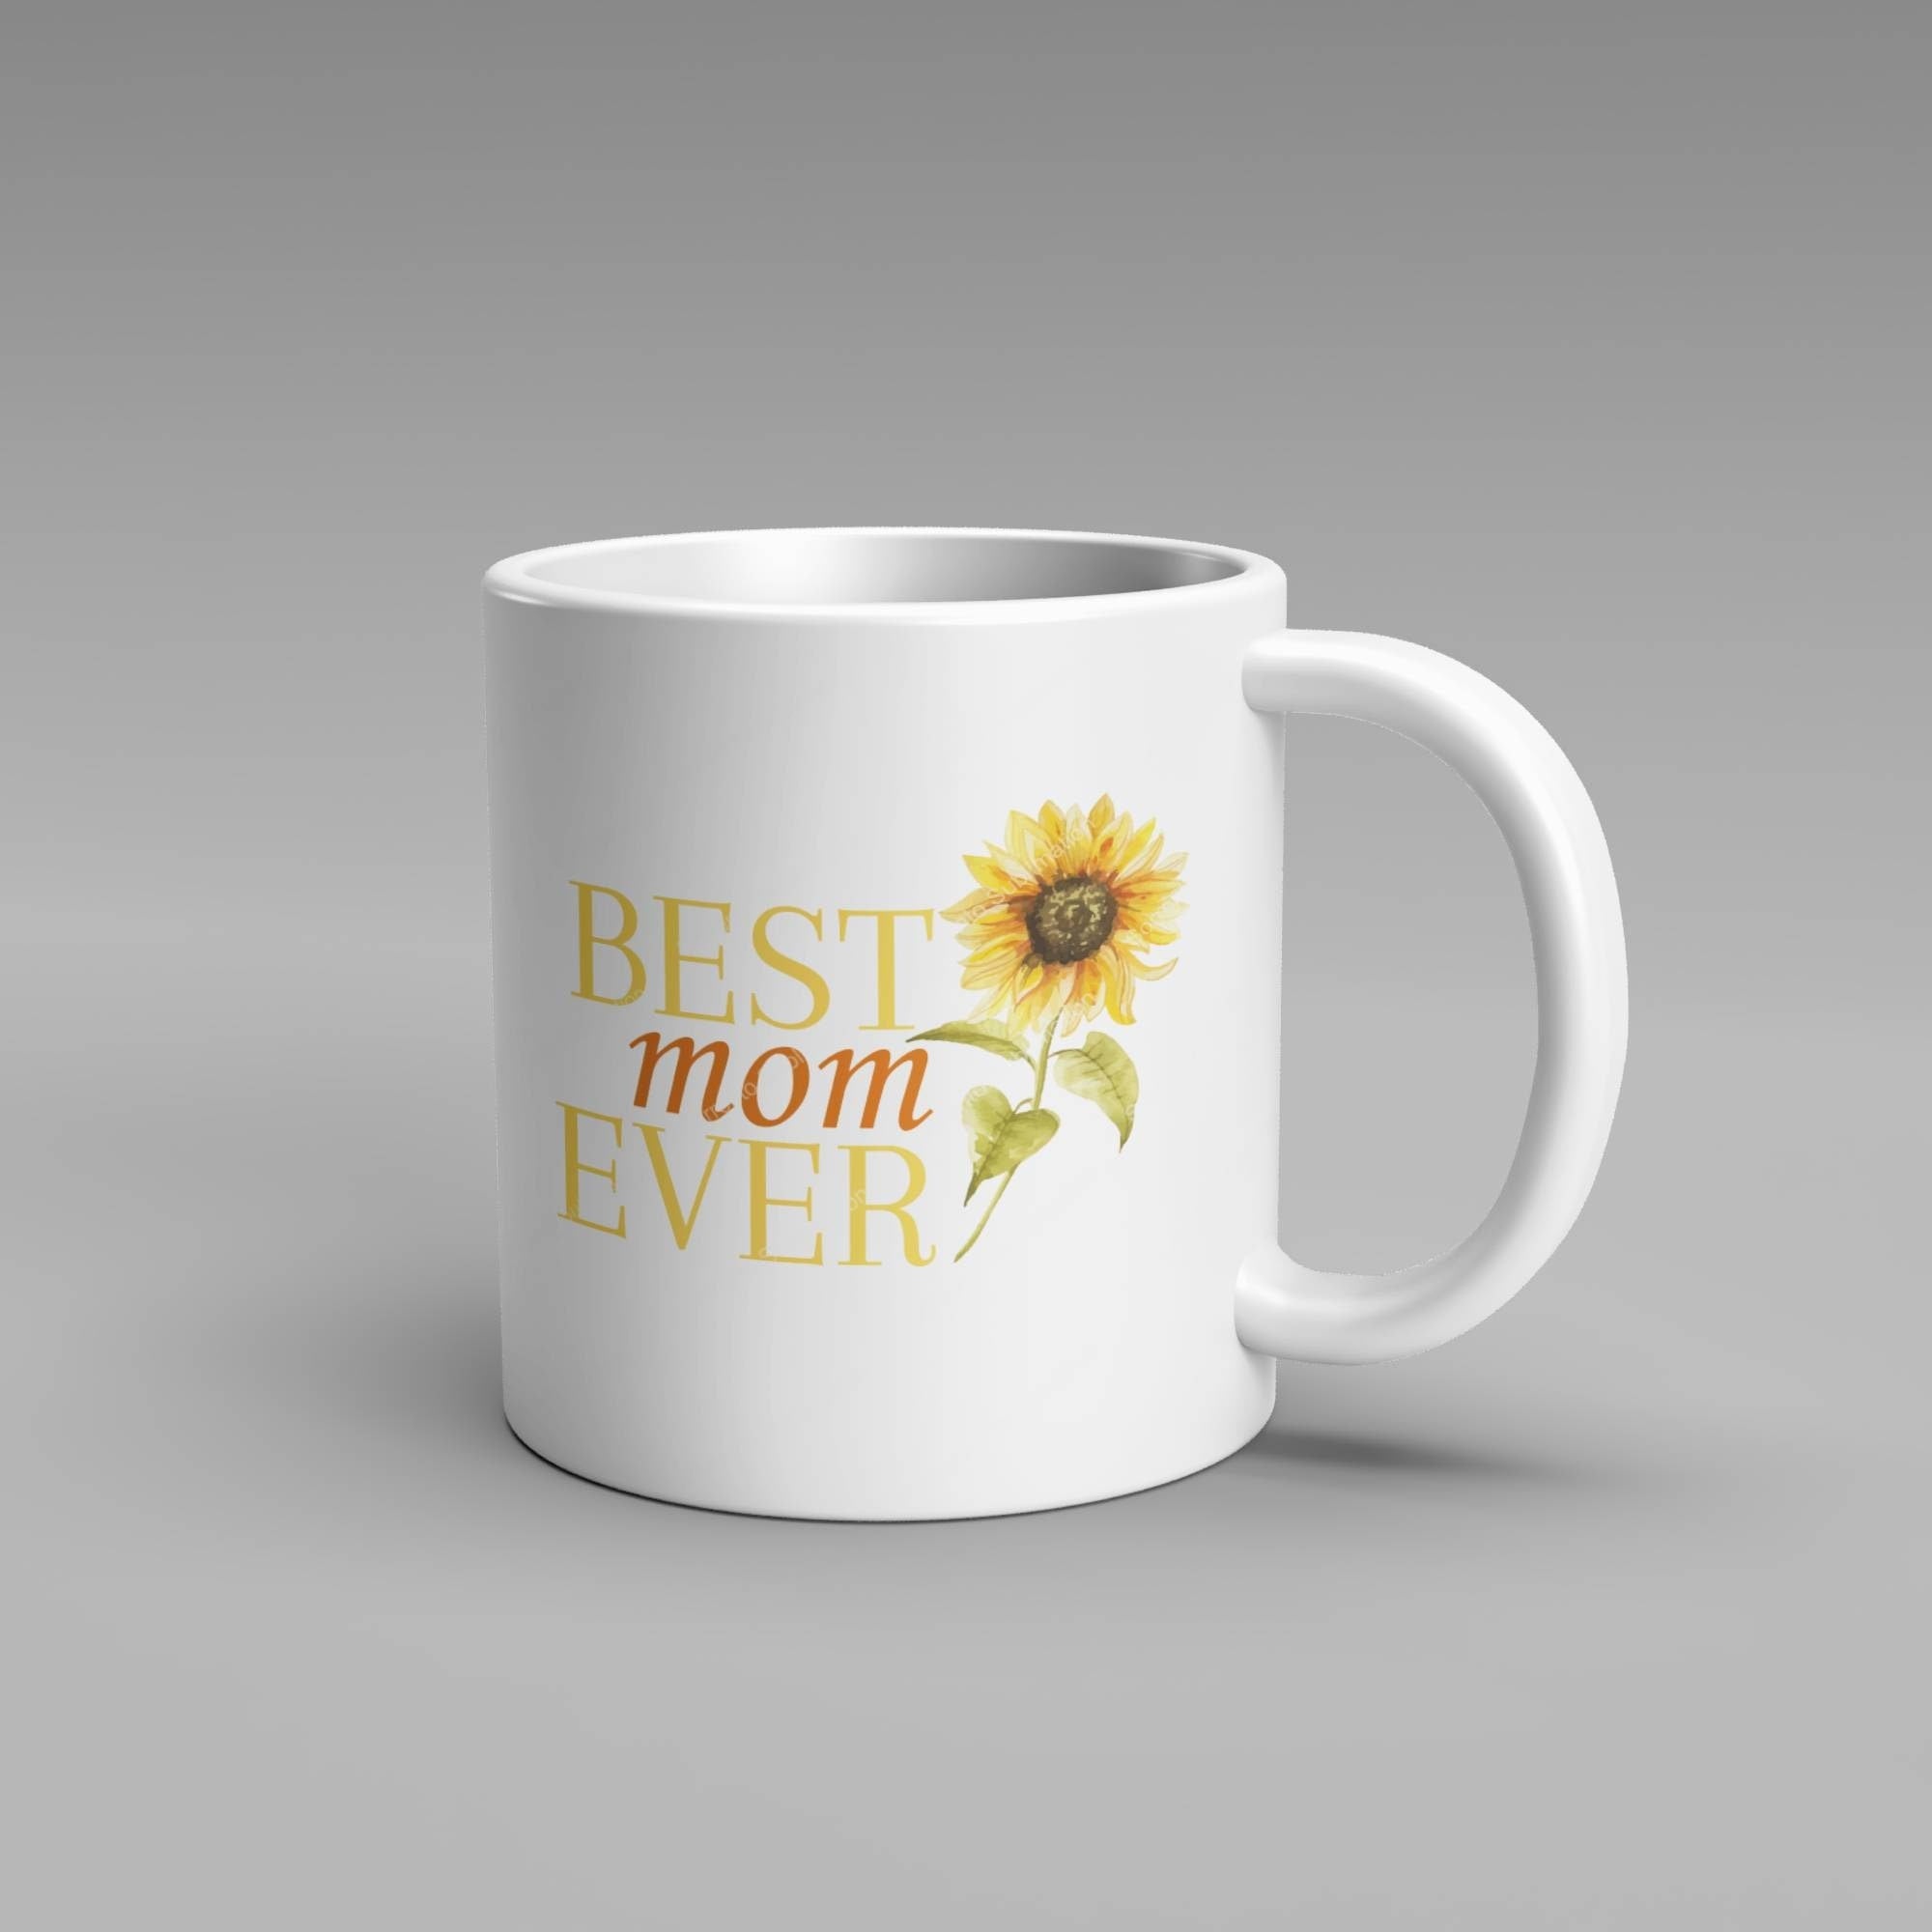 Best Mom Ever Mug Sunflower 12 oz, Hot Tea, Coffee, Hot Chocolate Mug. Perfect Gift for mom!